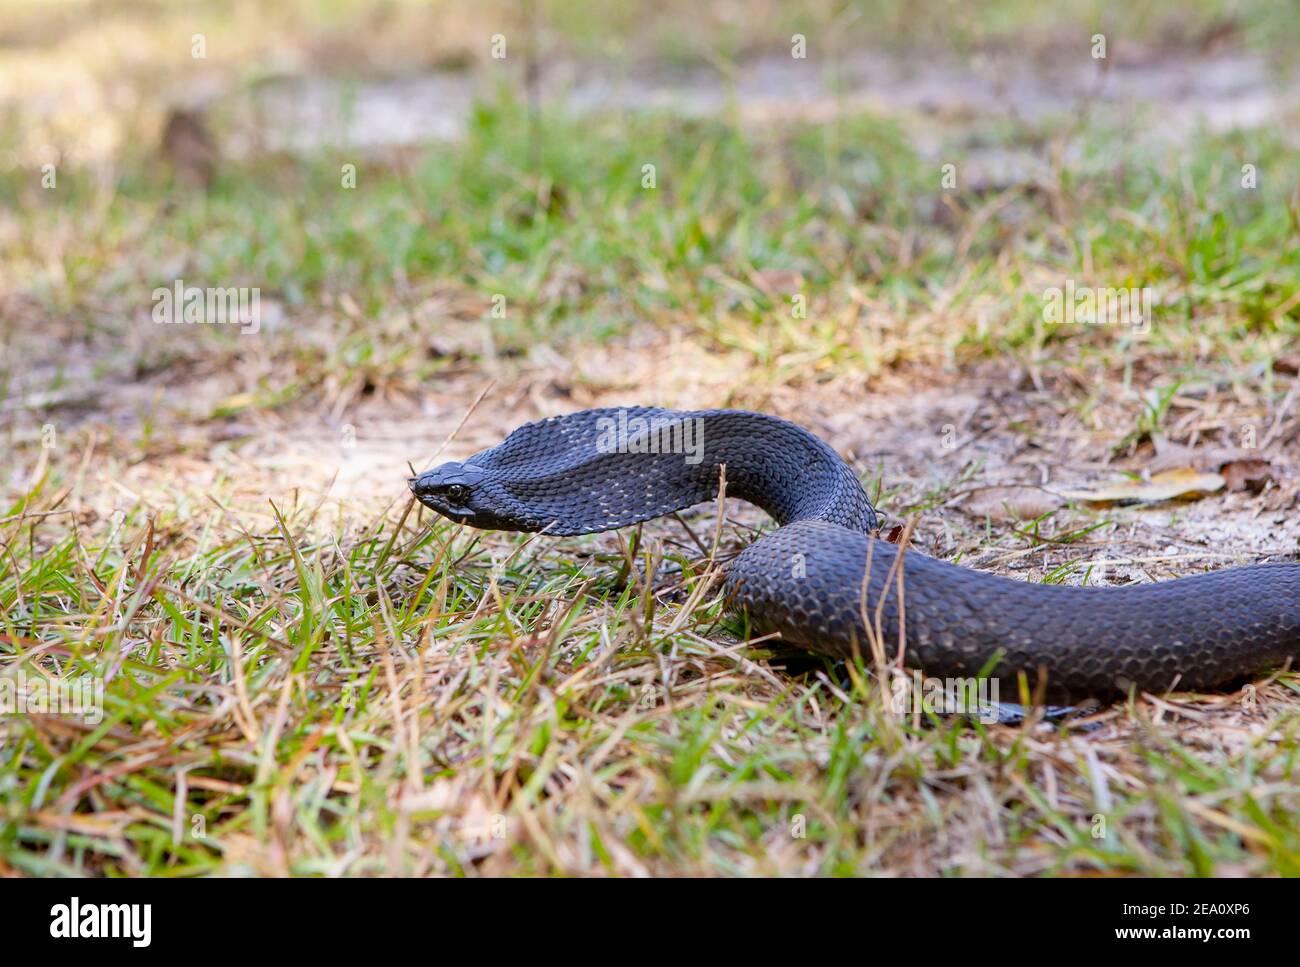 An eastern hognose snake (Heterodon platirhinos) with black pigmentation, in a grassy area, near Springfield, Georgia. Stock Photo